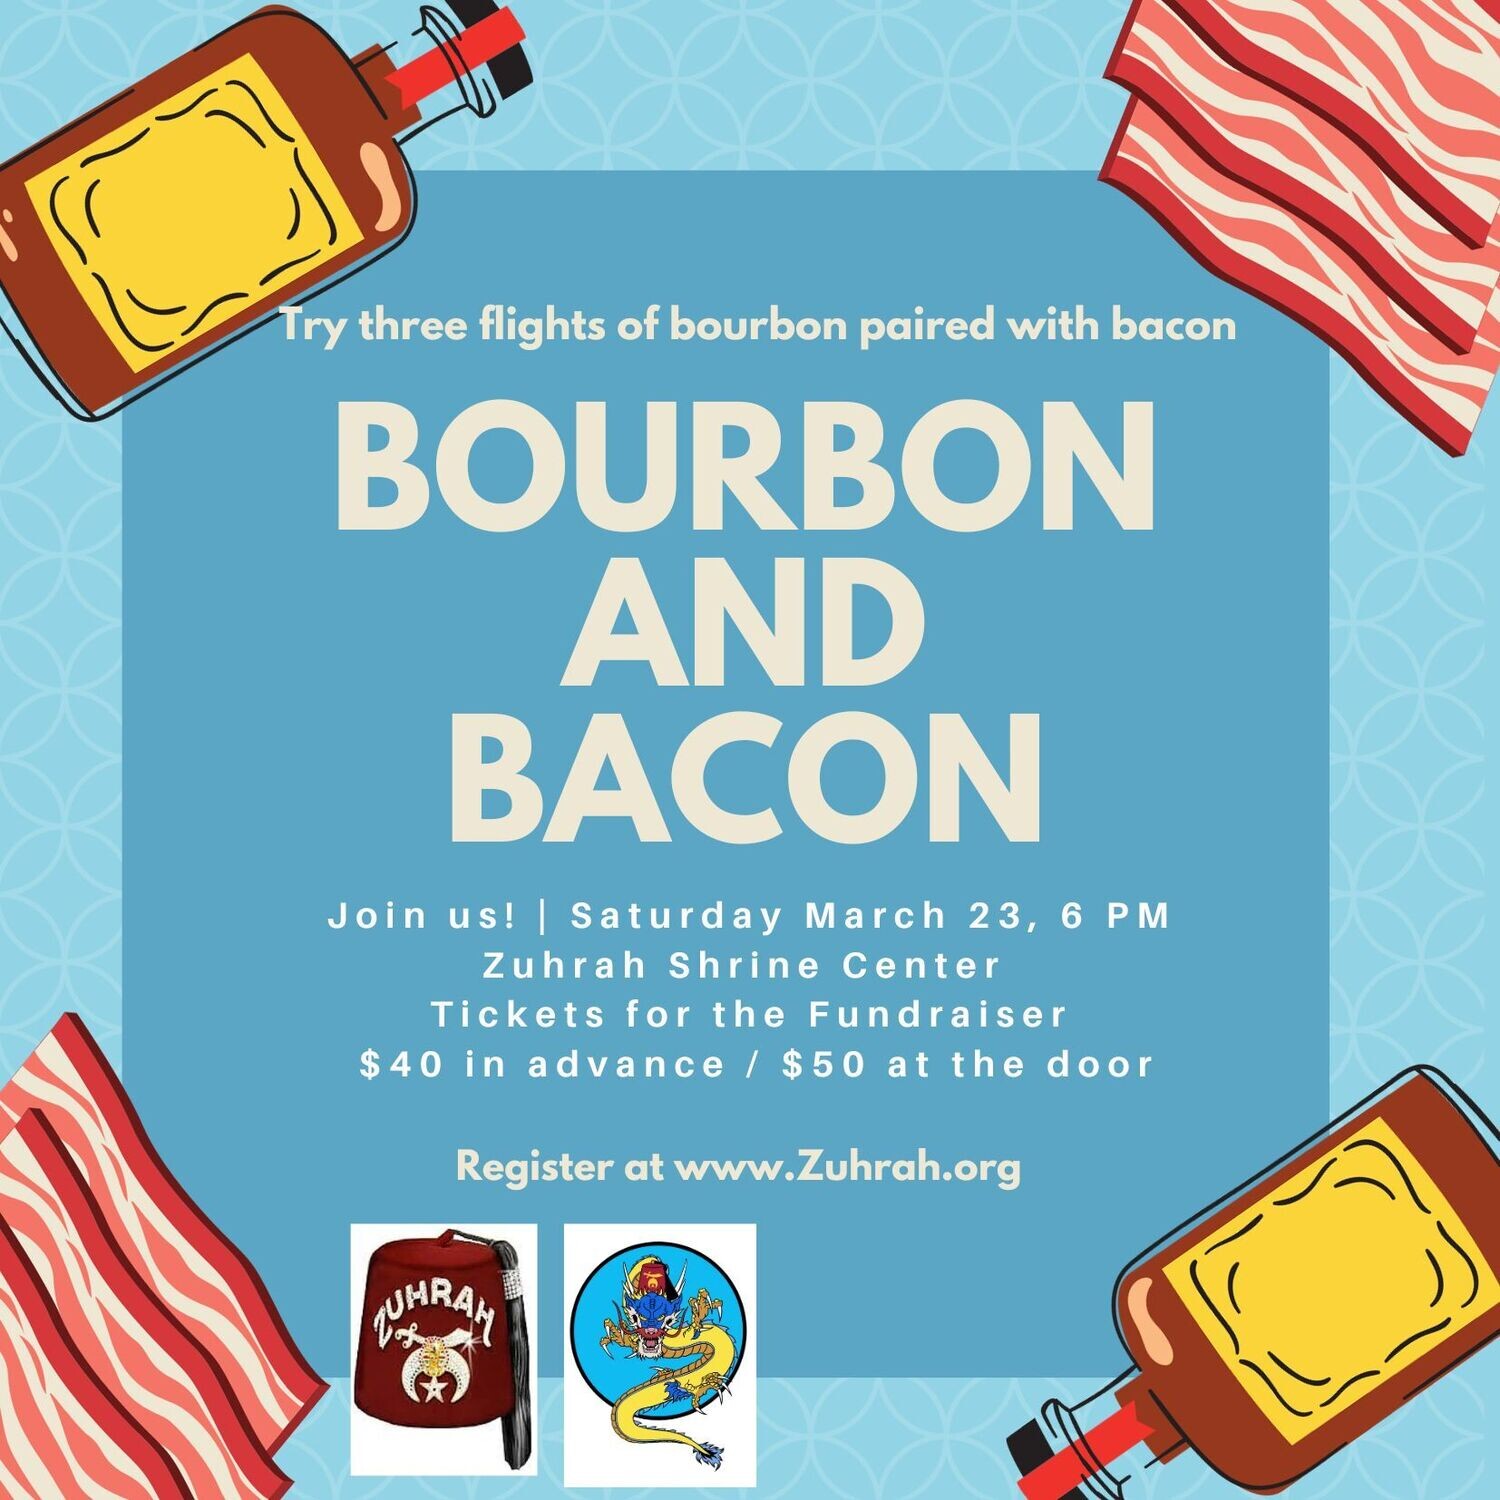 Register Bourbon Event, March 23rd